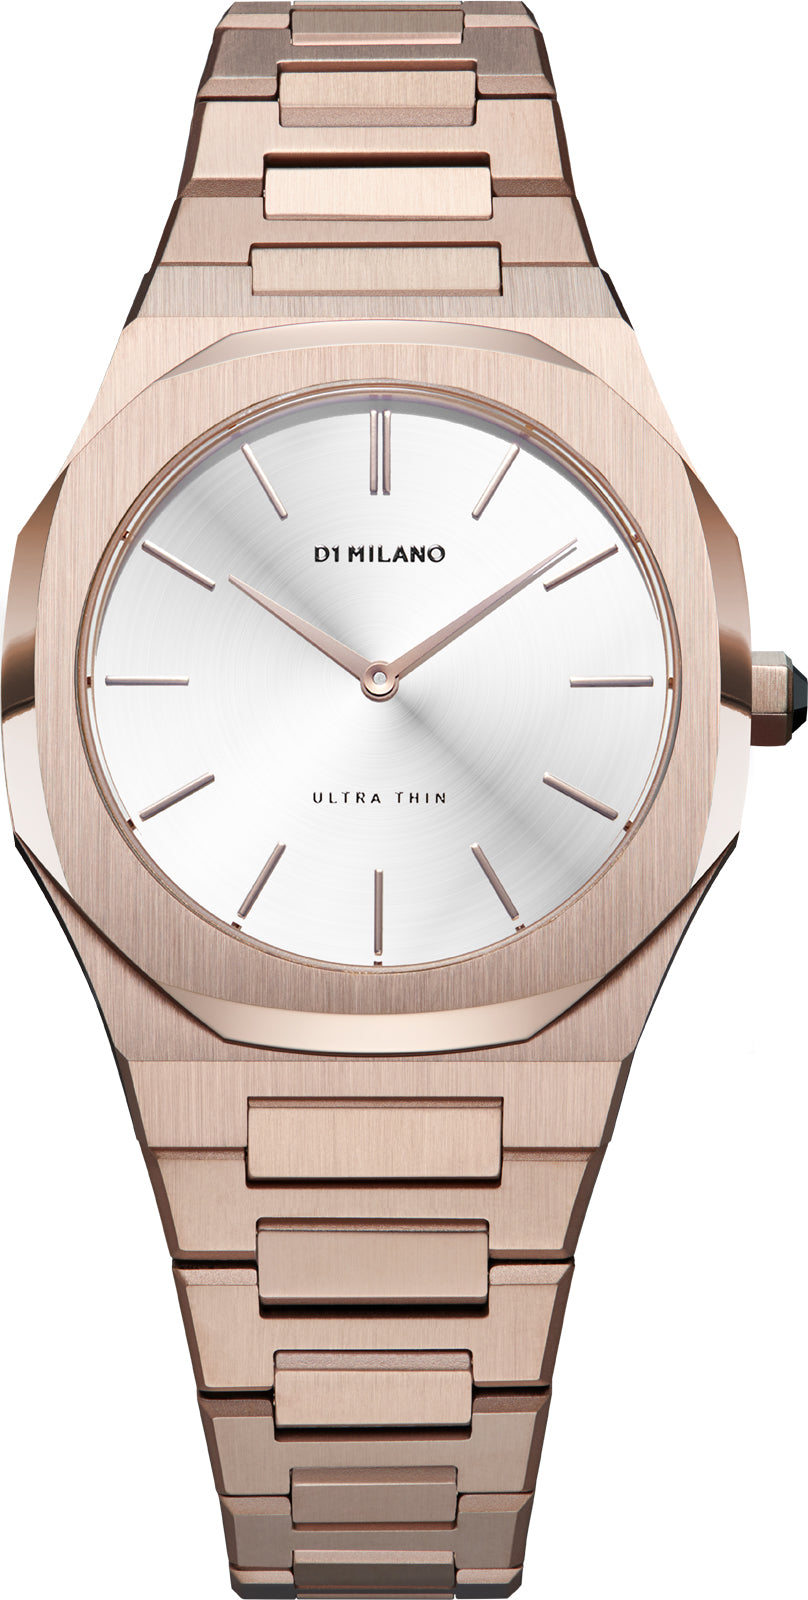 Photos - Wrist Watch Milano D1  Watch Ultra Thin - Silver DLM-059 